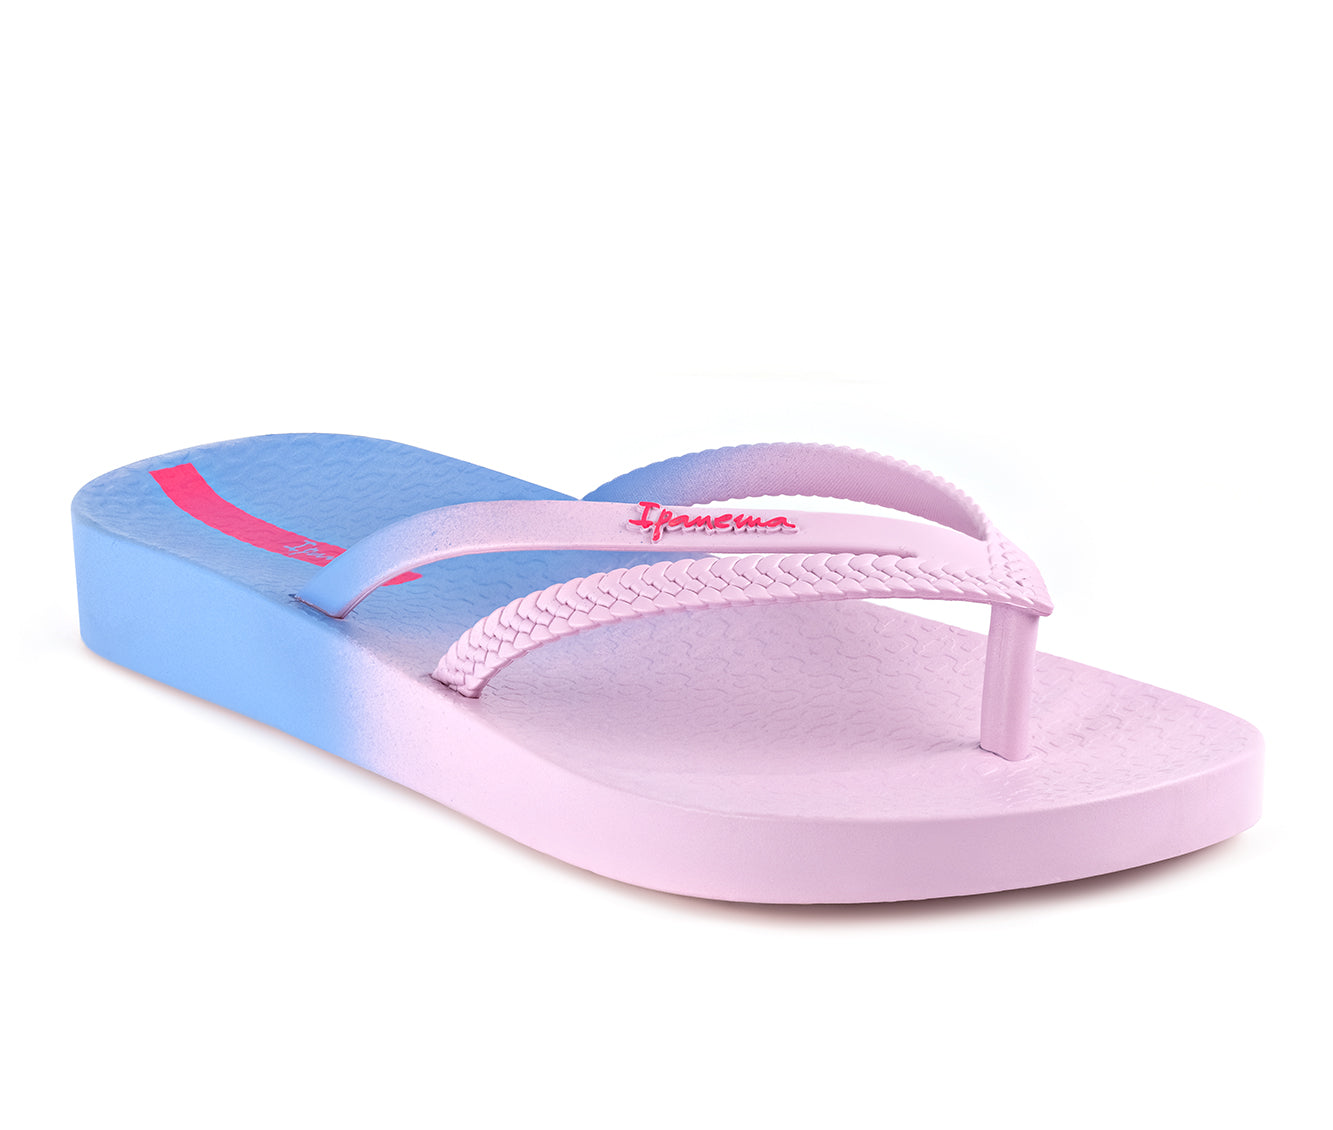 Ipanema Bossa Soft Chic Pink/Blue Angled View